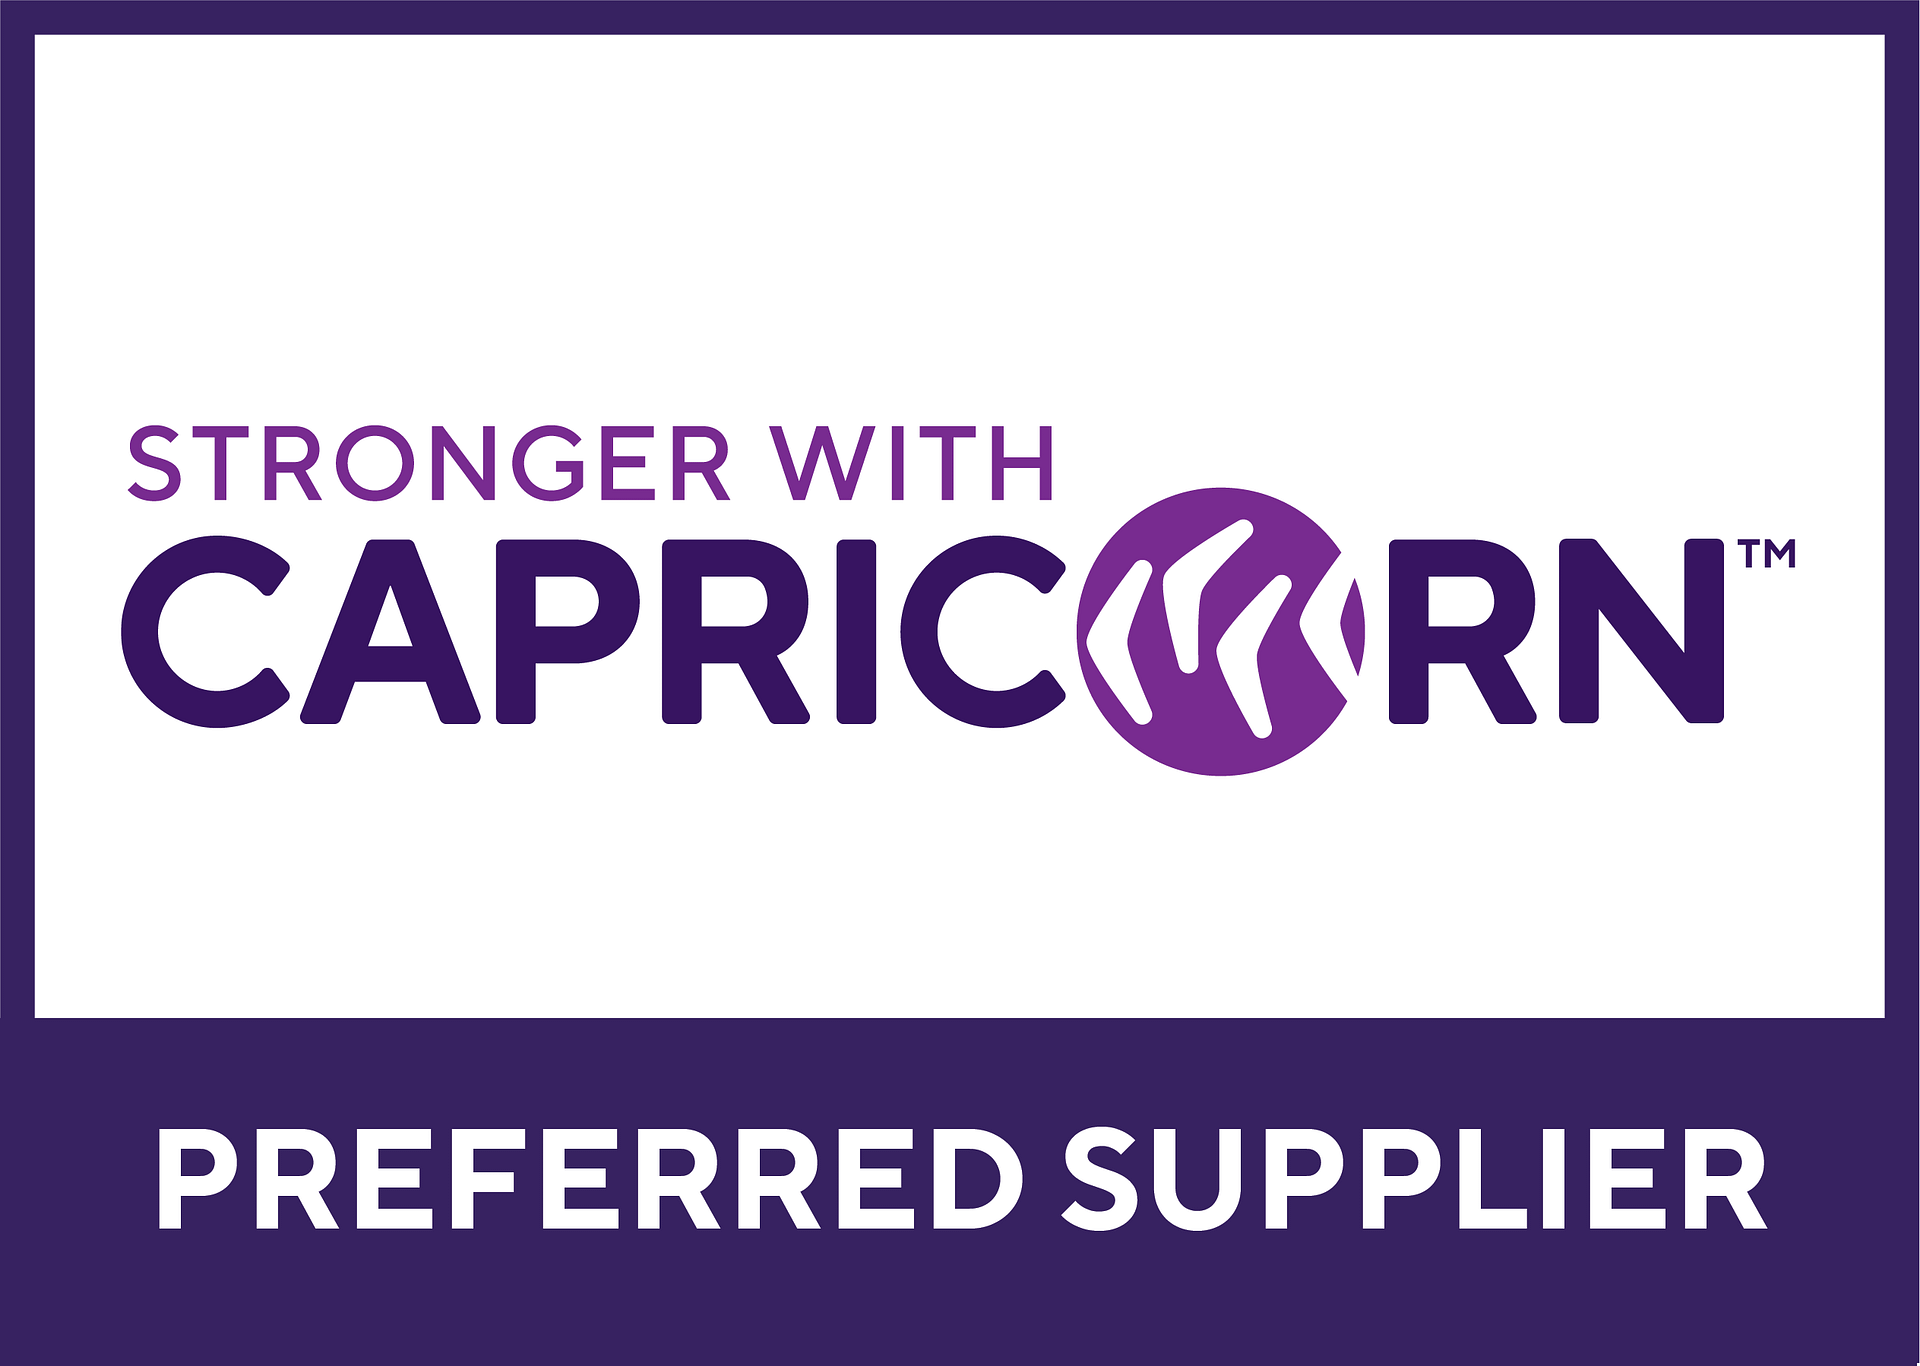 Preferred-Supplier Logo a _A5 2019 a White Background